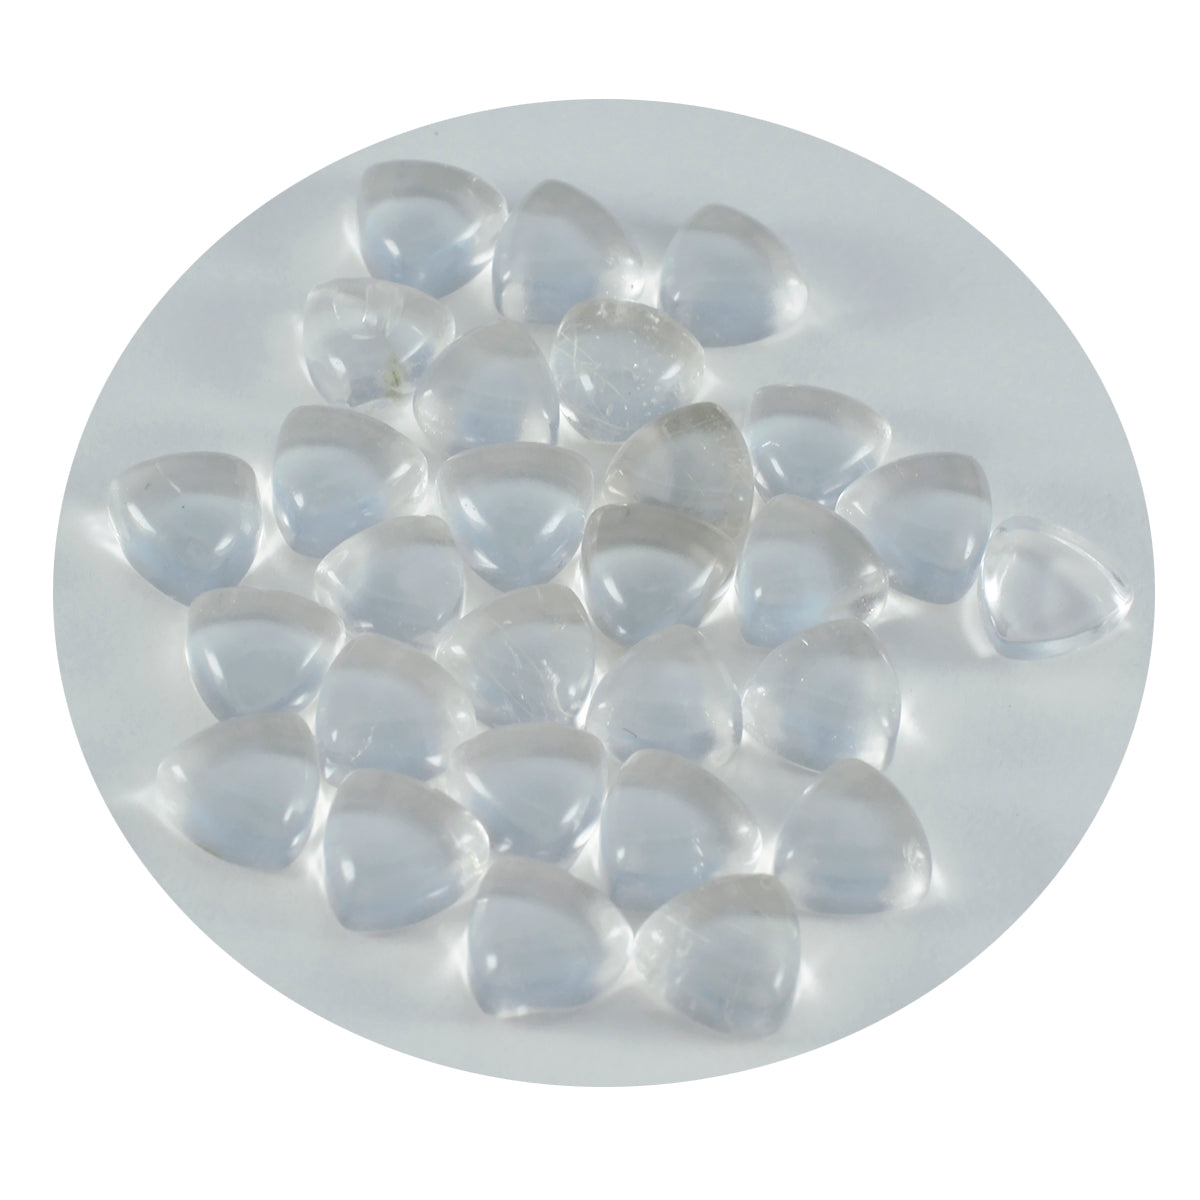 riyogems 1pc ホワイトクリスタルクォーツカボション 9x9 mm 兆形状甘い品質の宝石